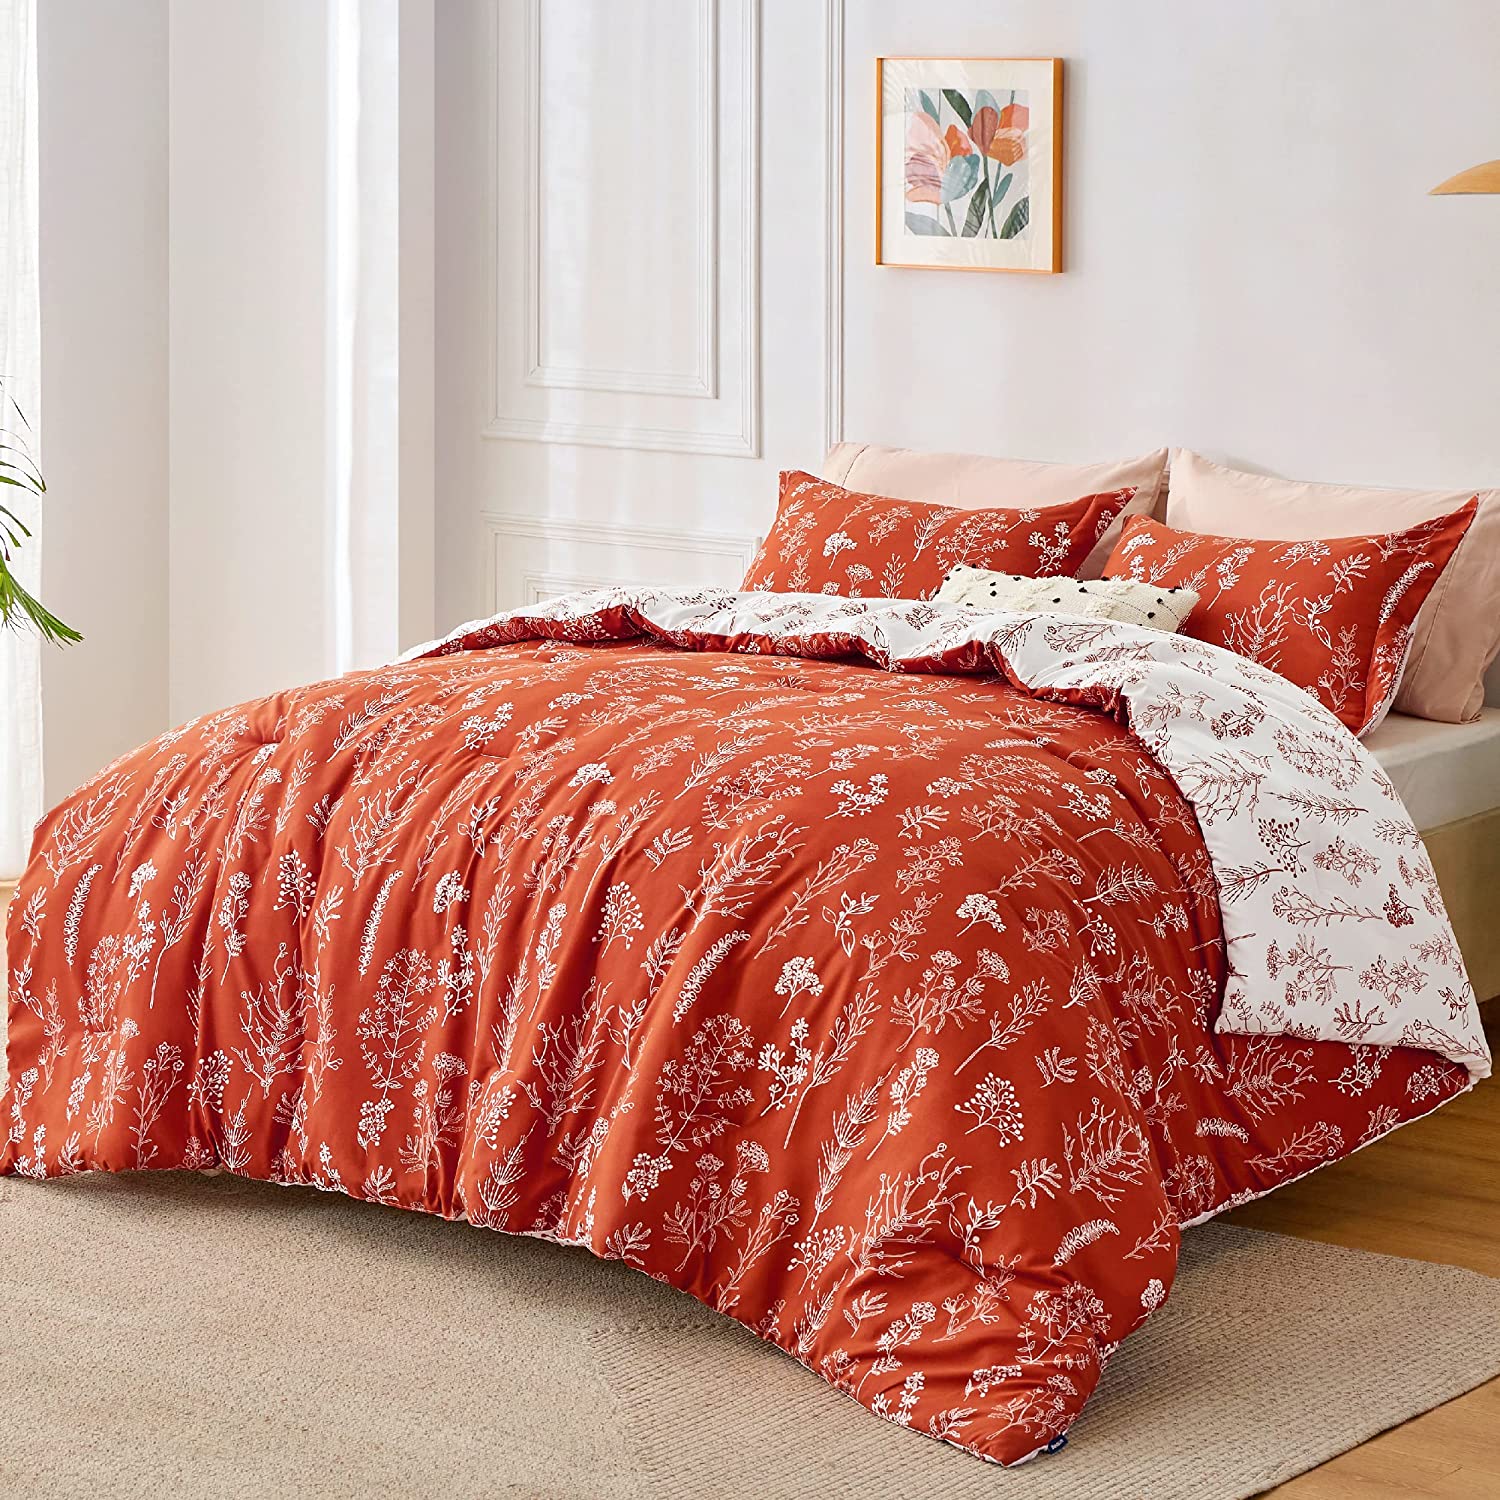 BEDSURE Twin Comforter Set - Khaki Comforter, Cute Floral Bedding